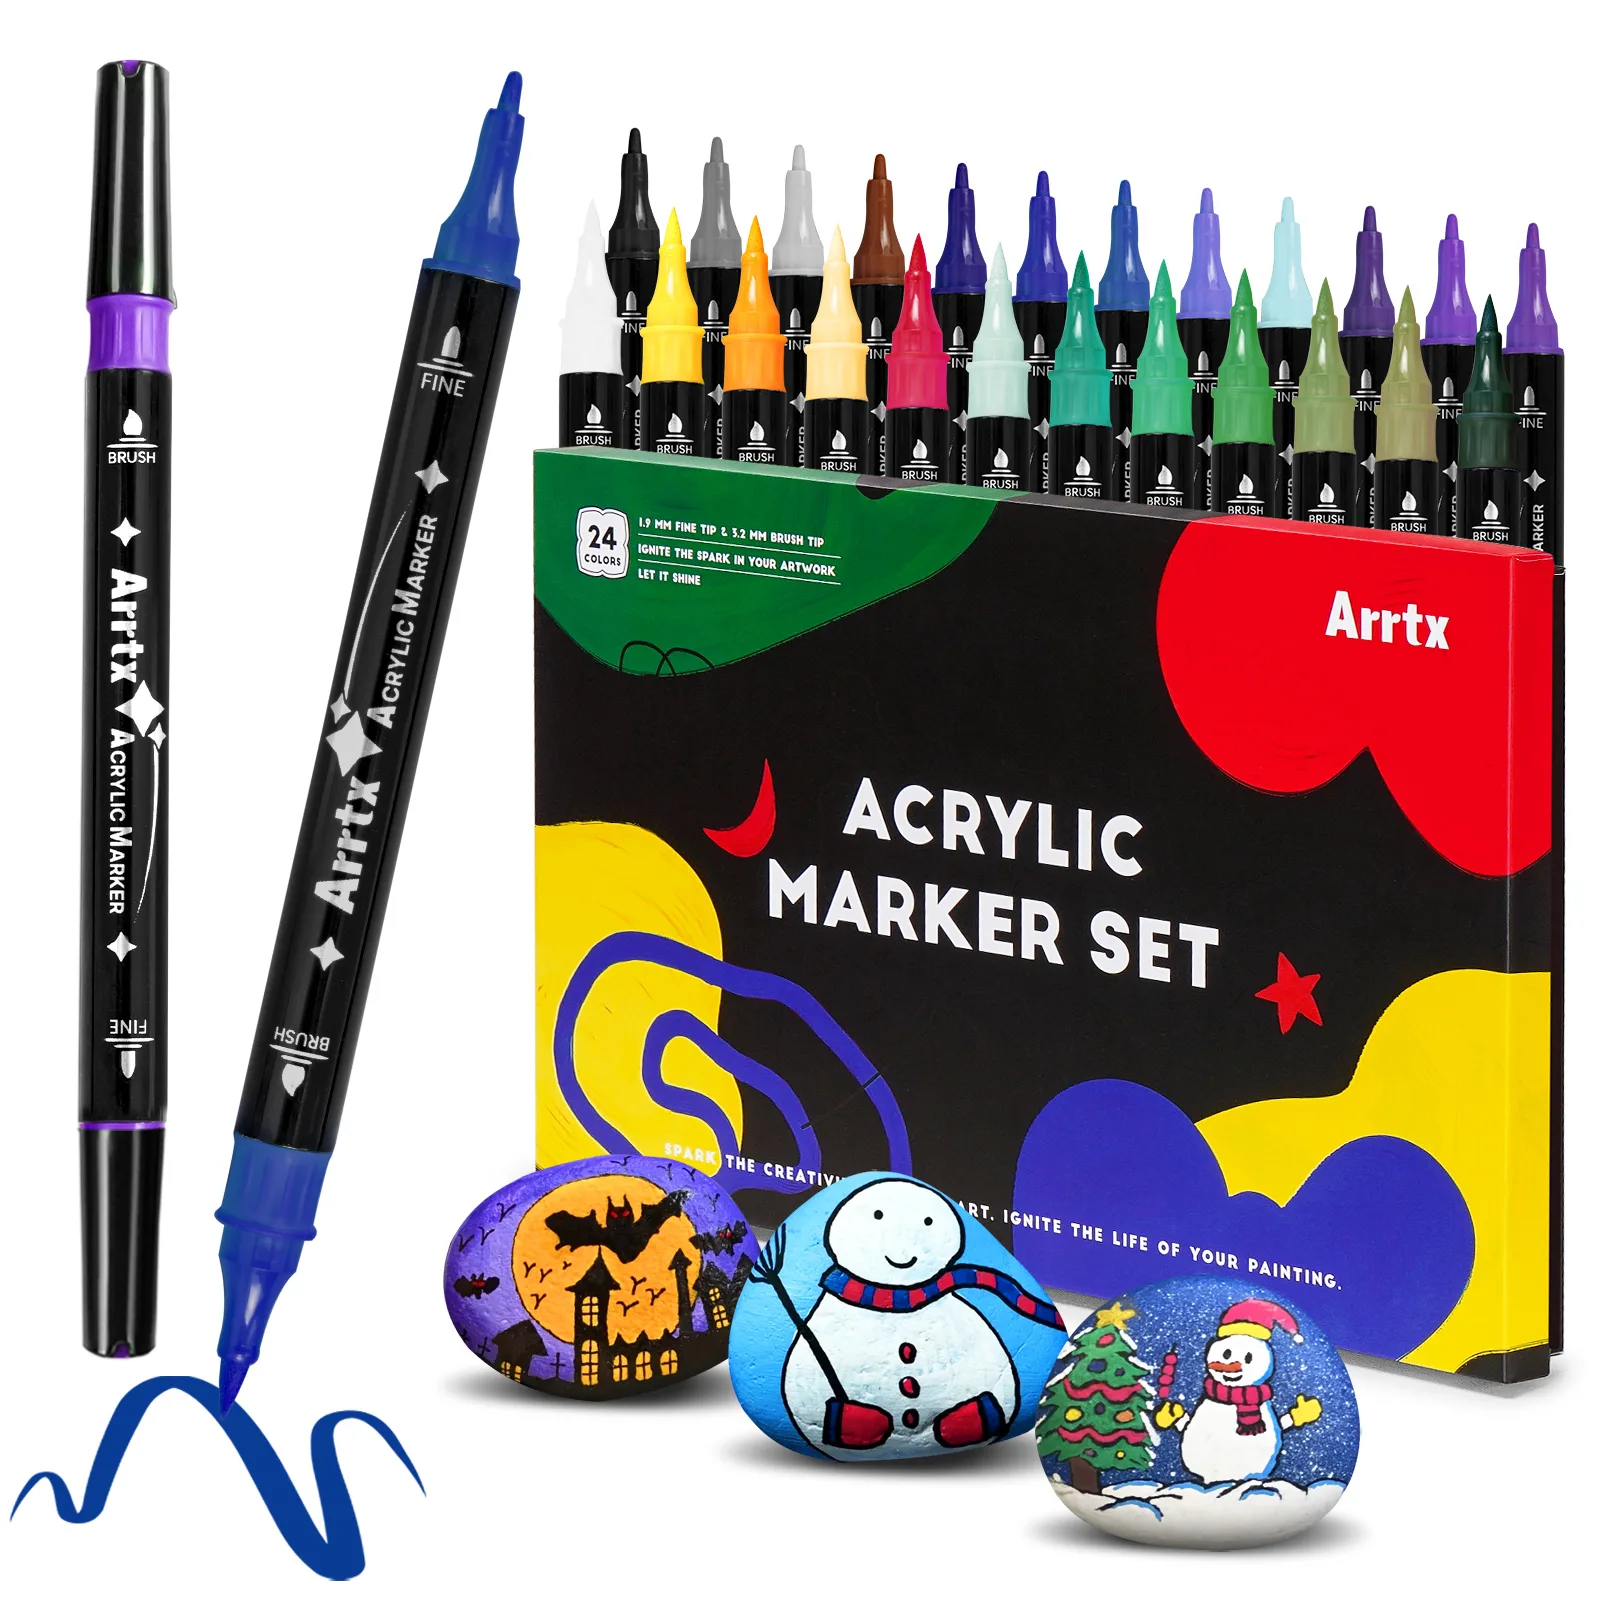 arrtx acrylic markers liners｜TikTok Search